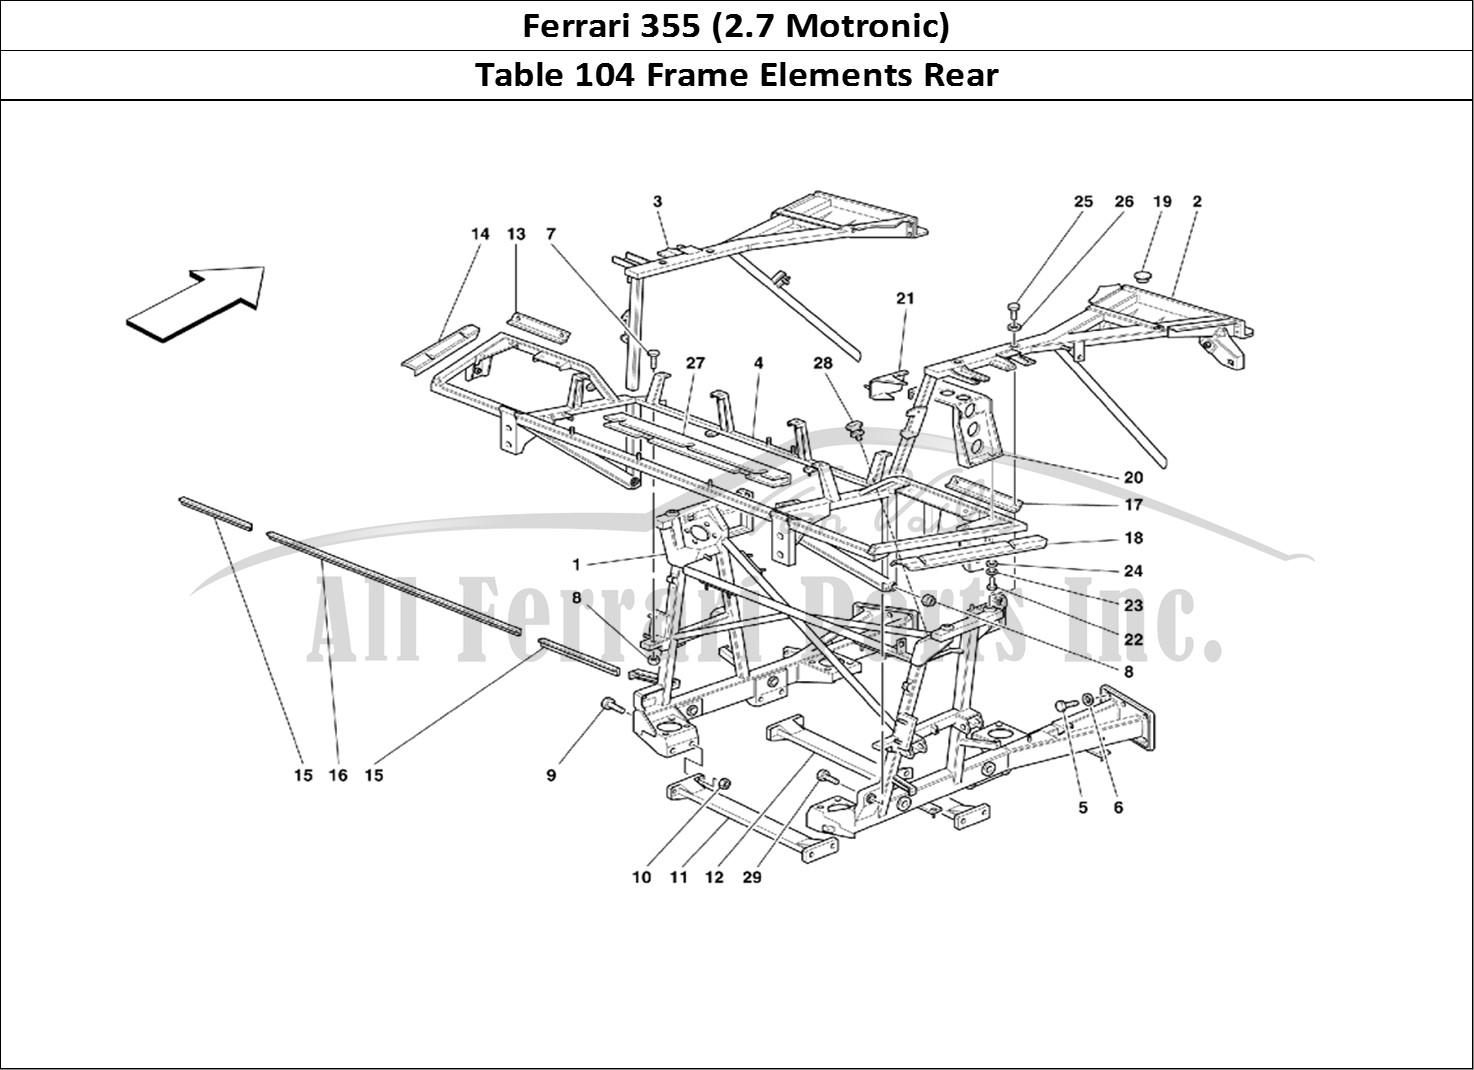 Ferrari Parts Ferrari 355 (2.7 Motronic) Page 104 Frame - Rear Part Element